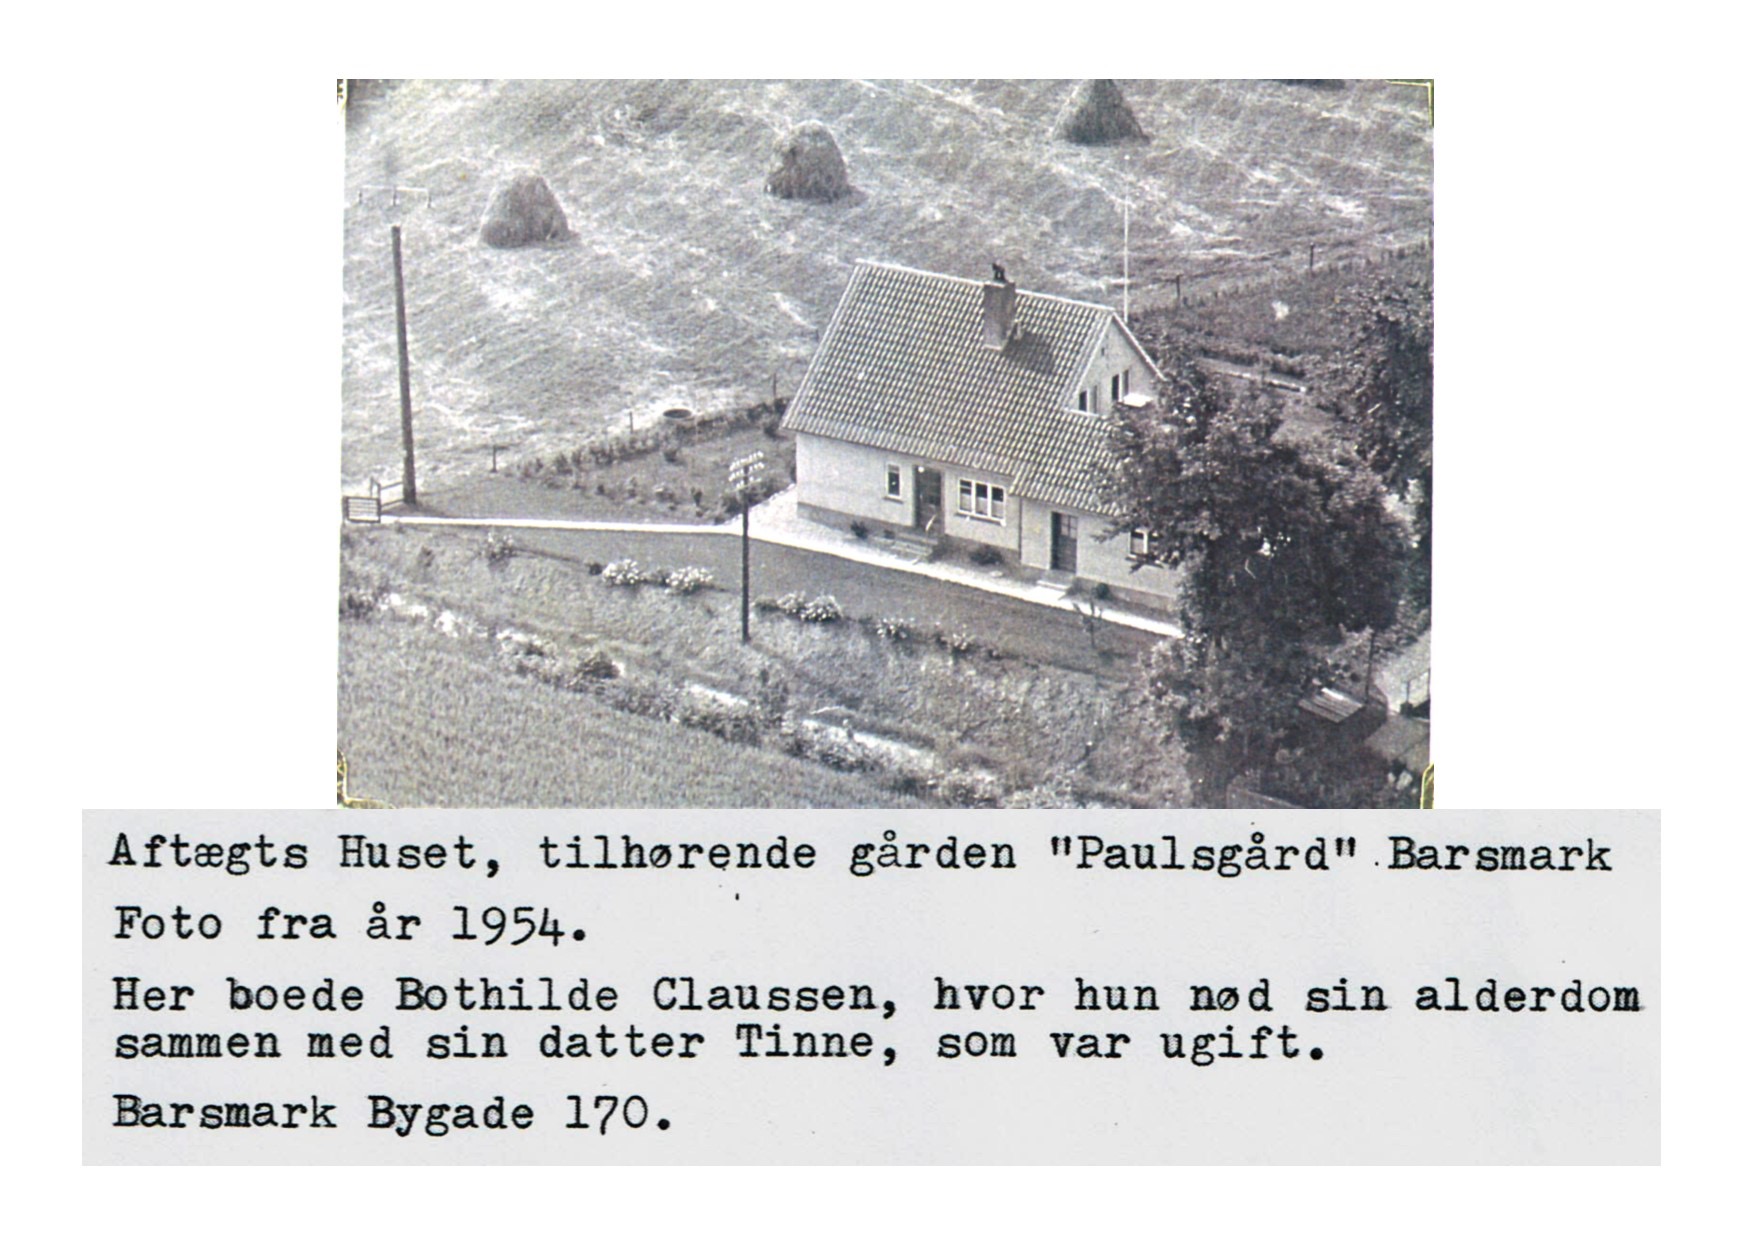 Barsmark Bygade 170 1954 